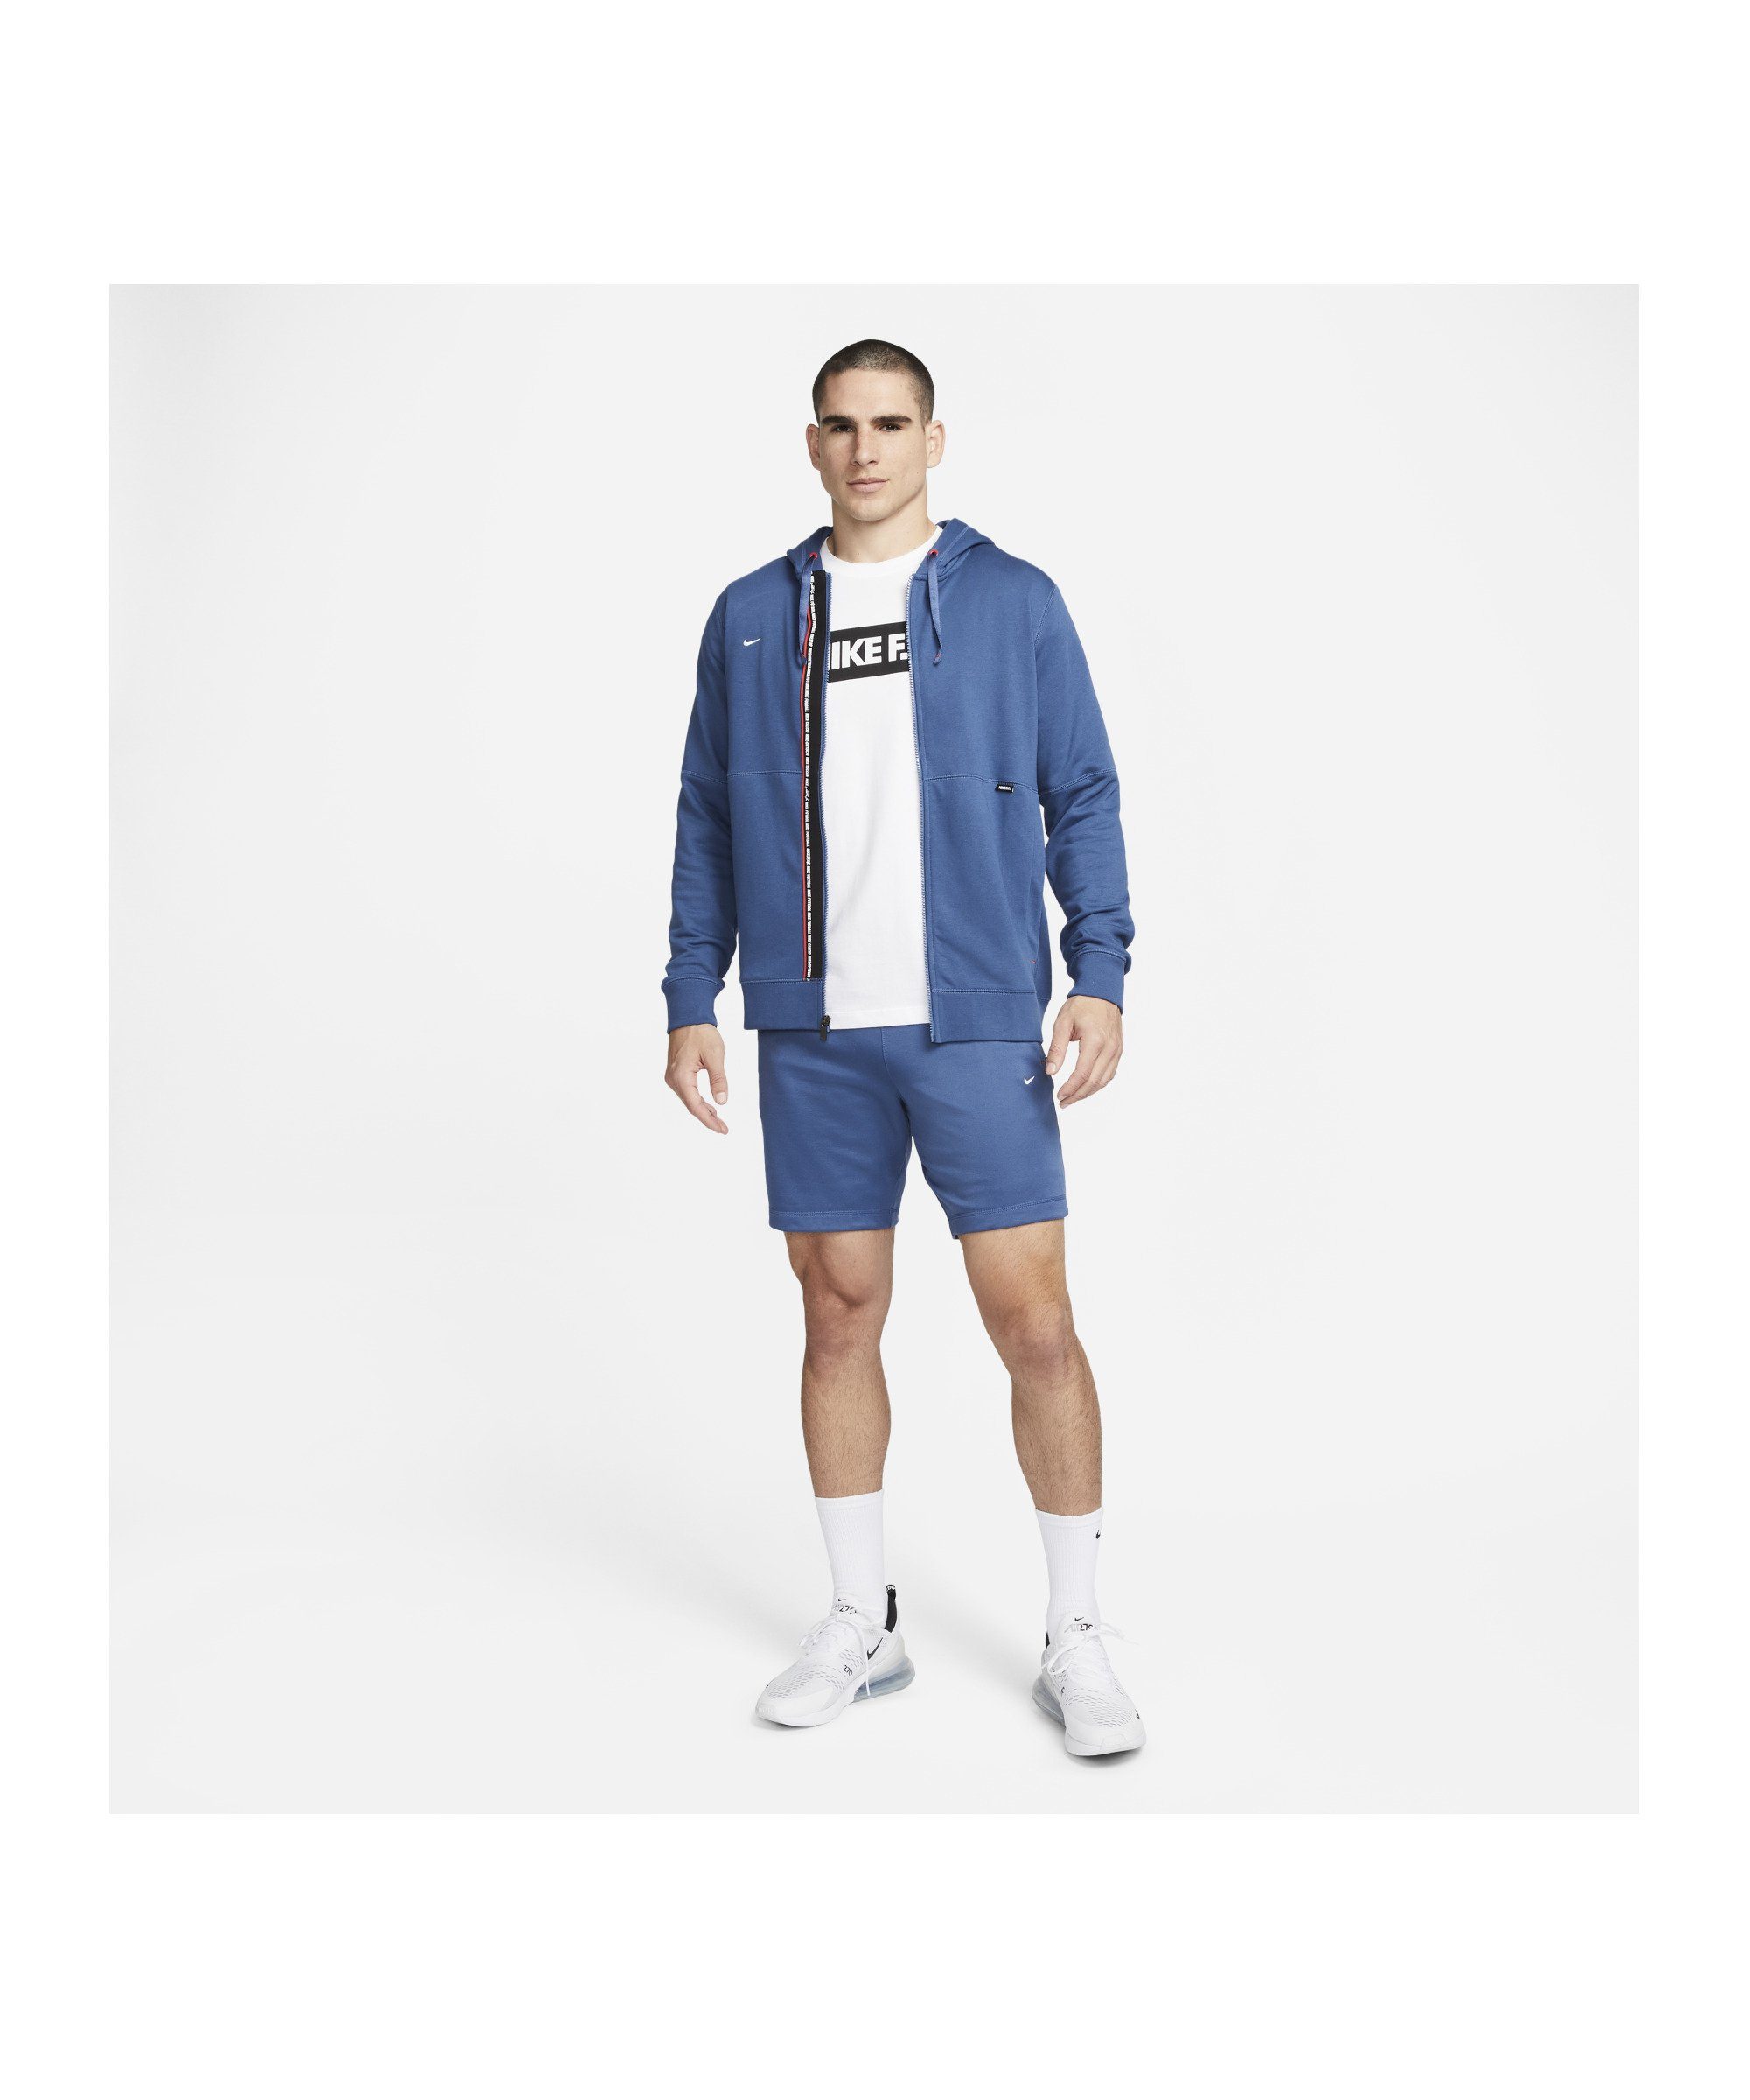 F.C. Tribuna Sweatjacke Sportswear blaurotweiss Kapuzenjacke Nike